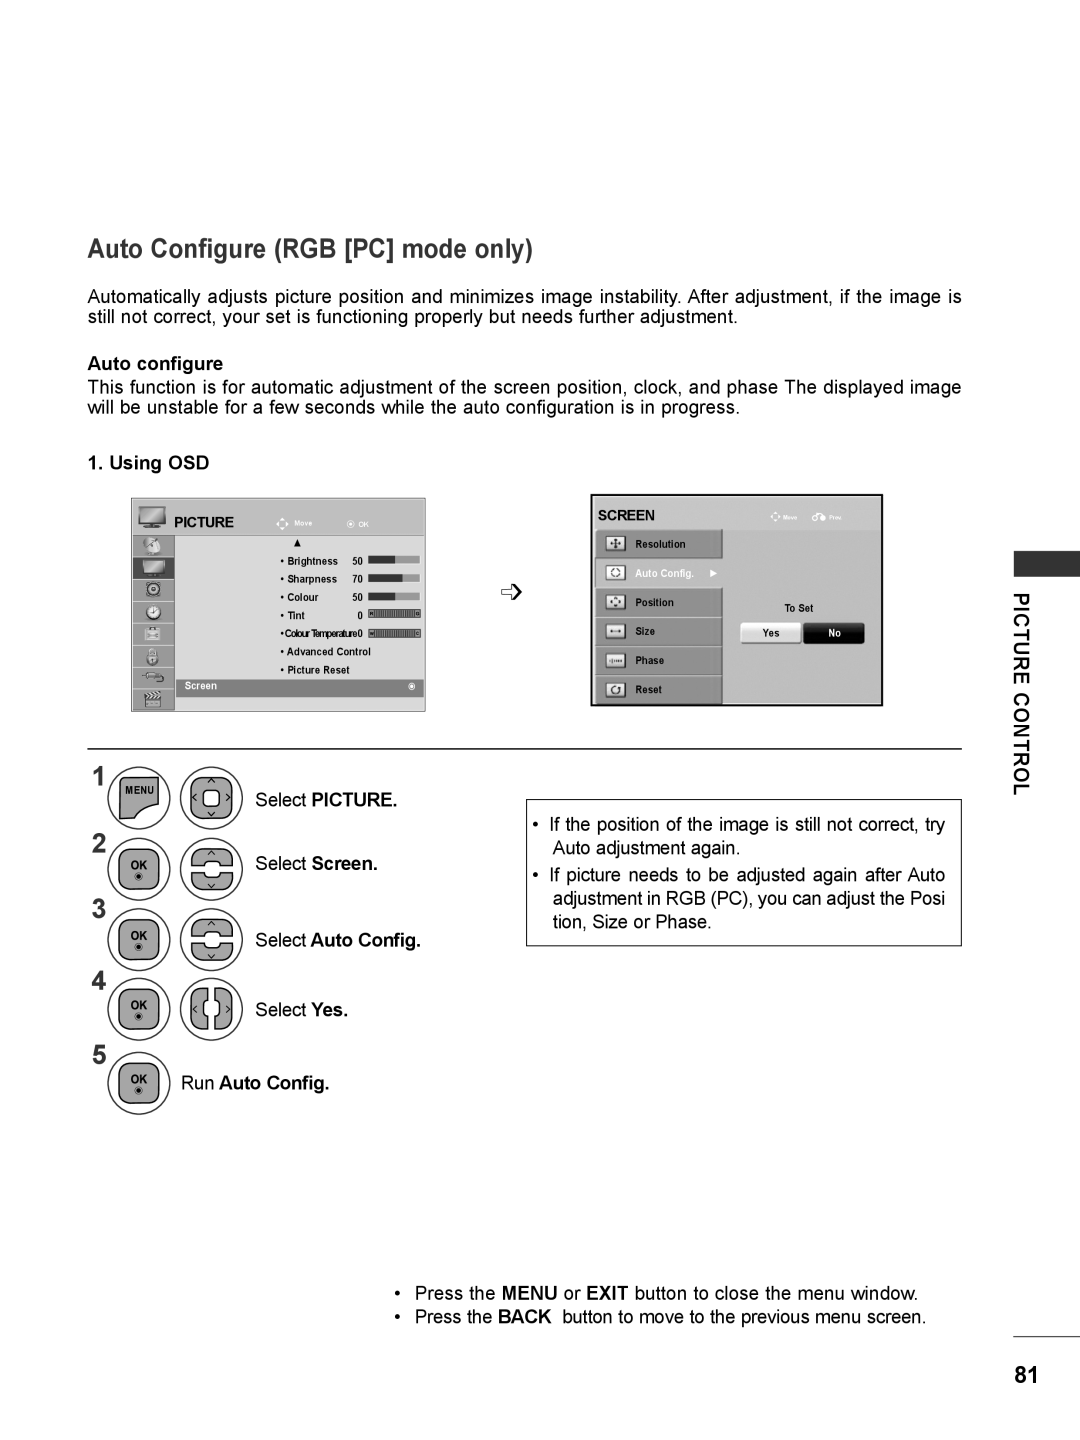 LG Electronics M2280DN Auto Configure RGB PC mode only, Auto configure, Using OSD, Select Auto Config, Run Auto Config 